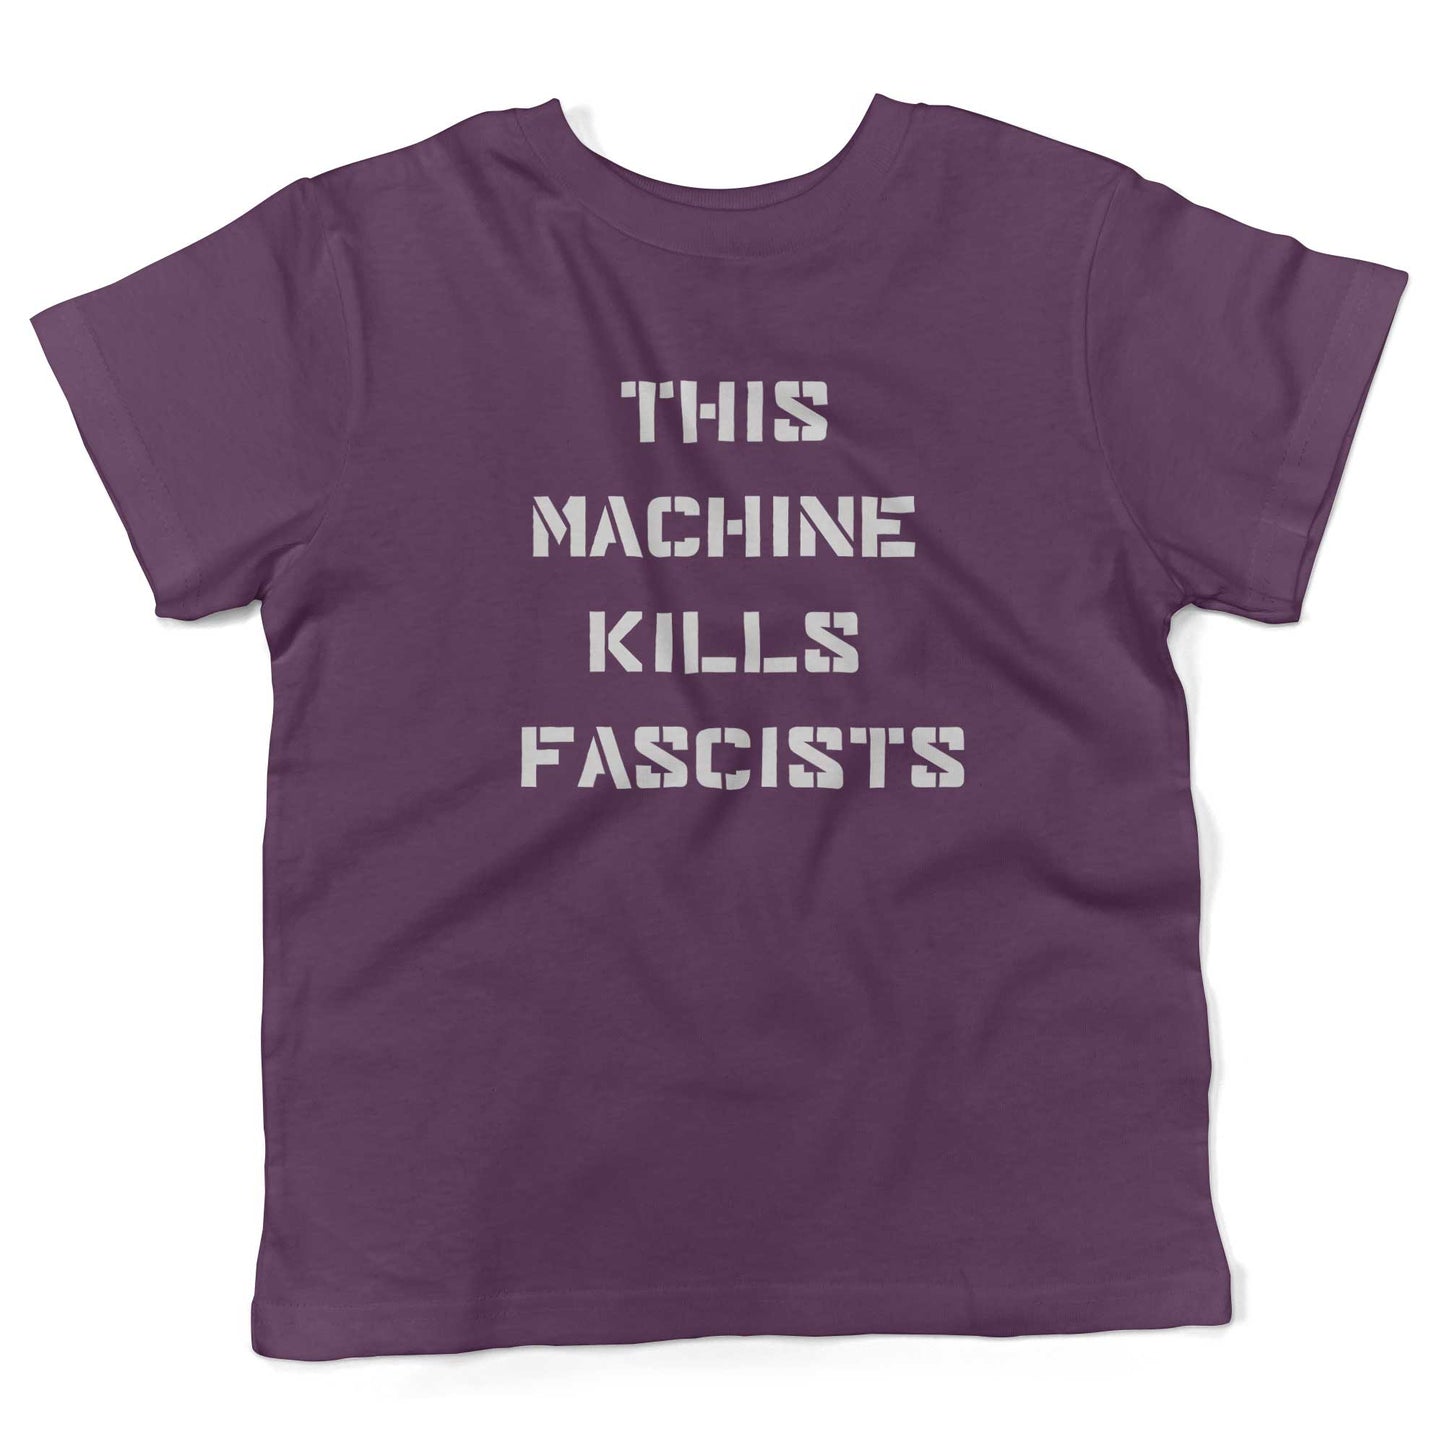 This Machine Kills Fascists Toddler Shirt-Organic Purple-2T